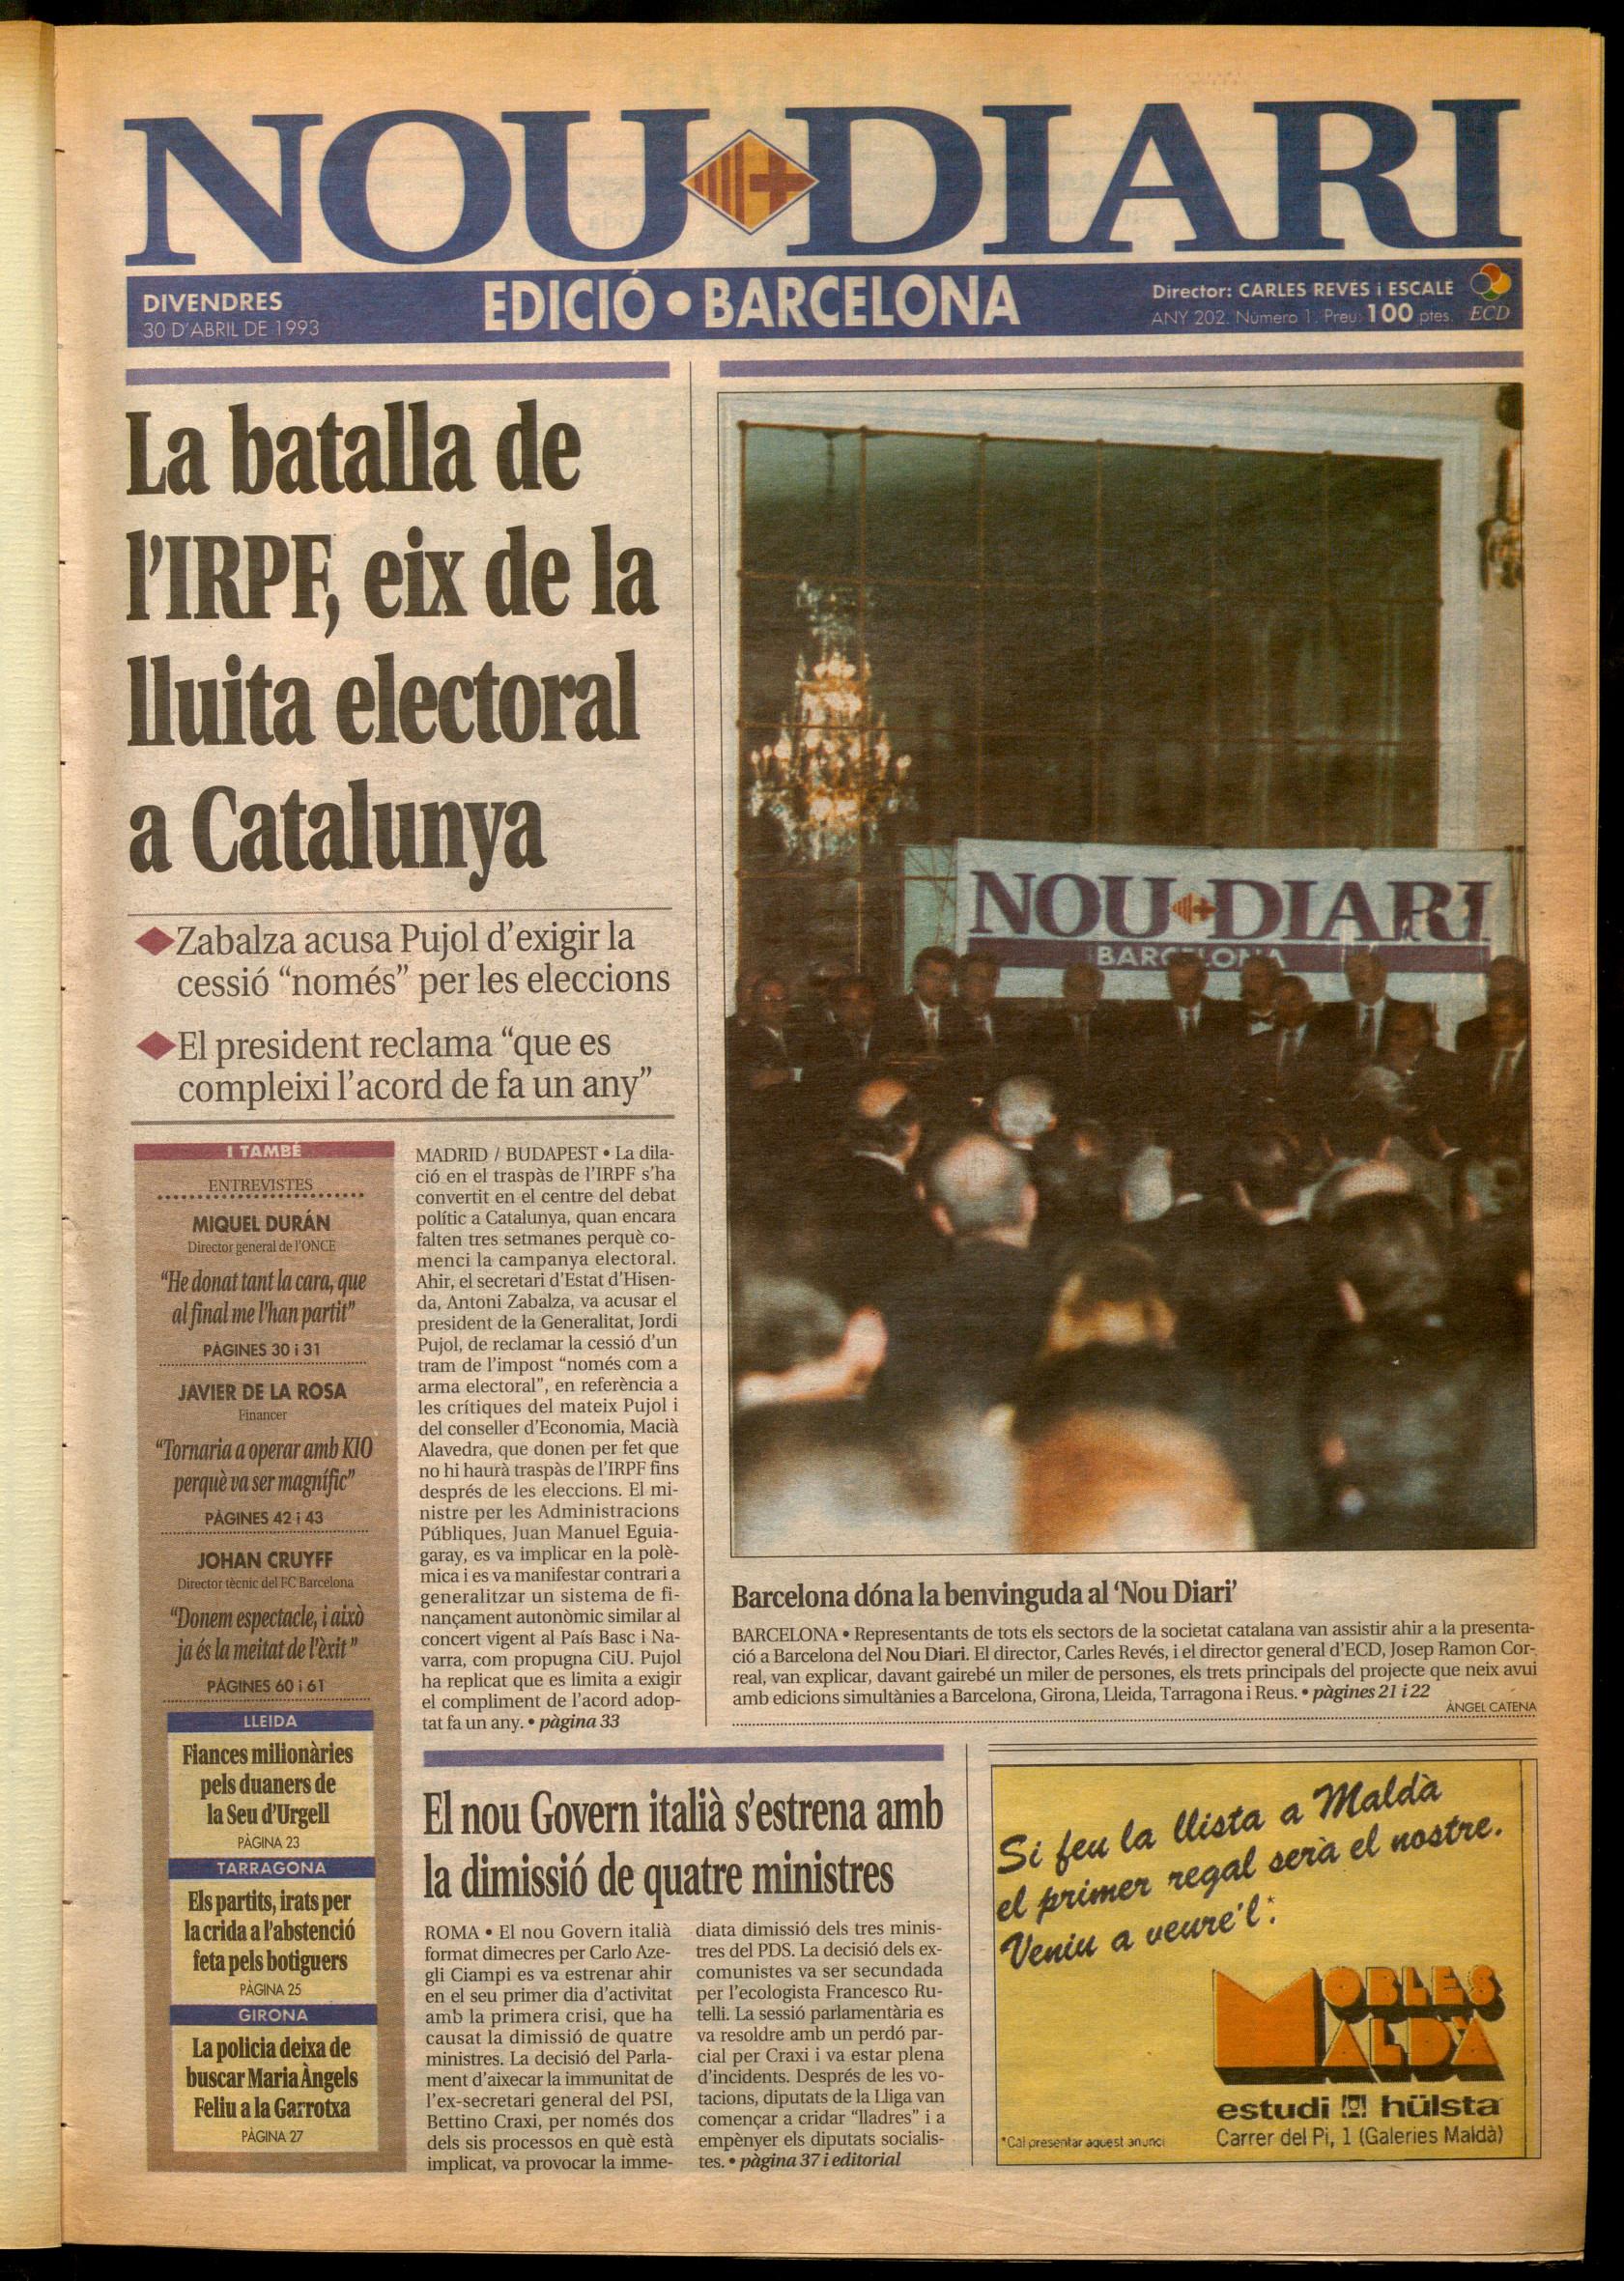 Imatge del Nou diari, 30 abril 1993